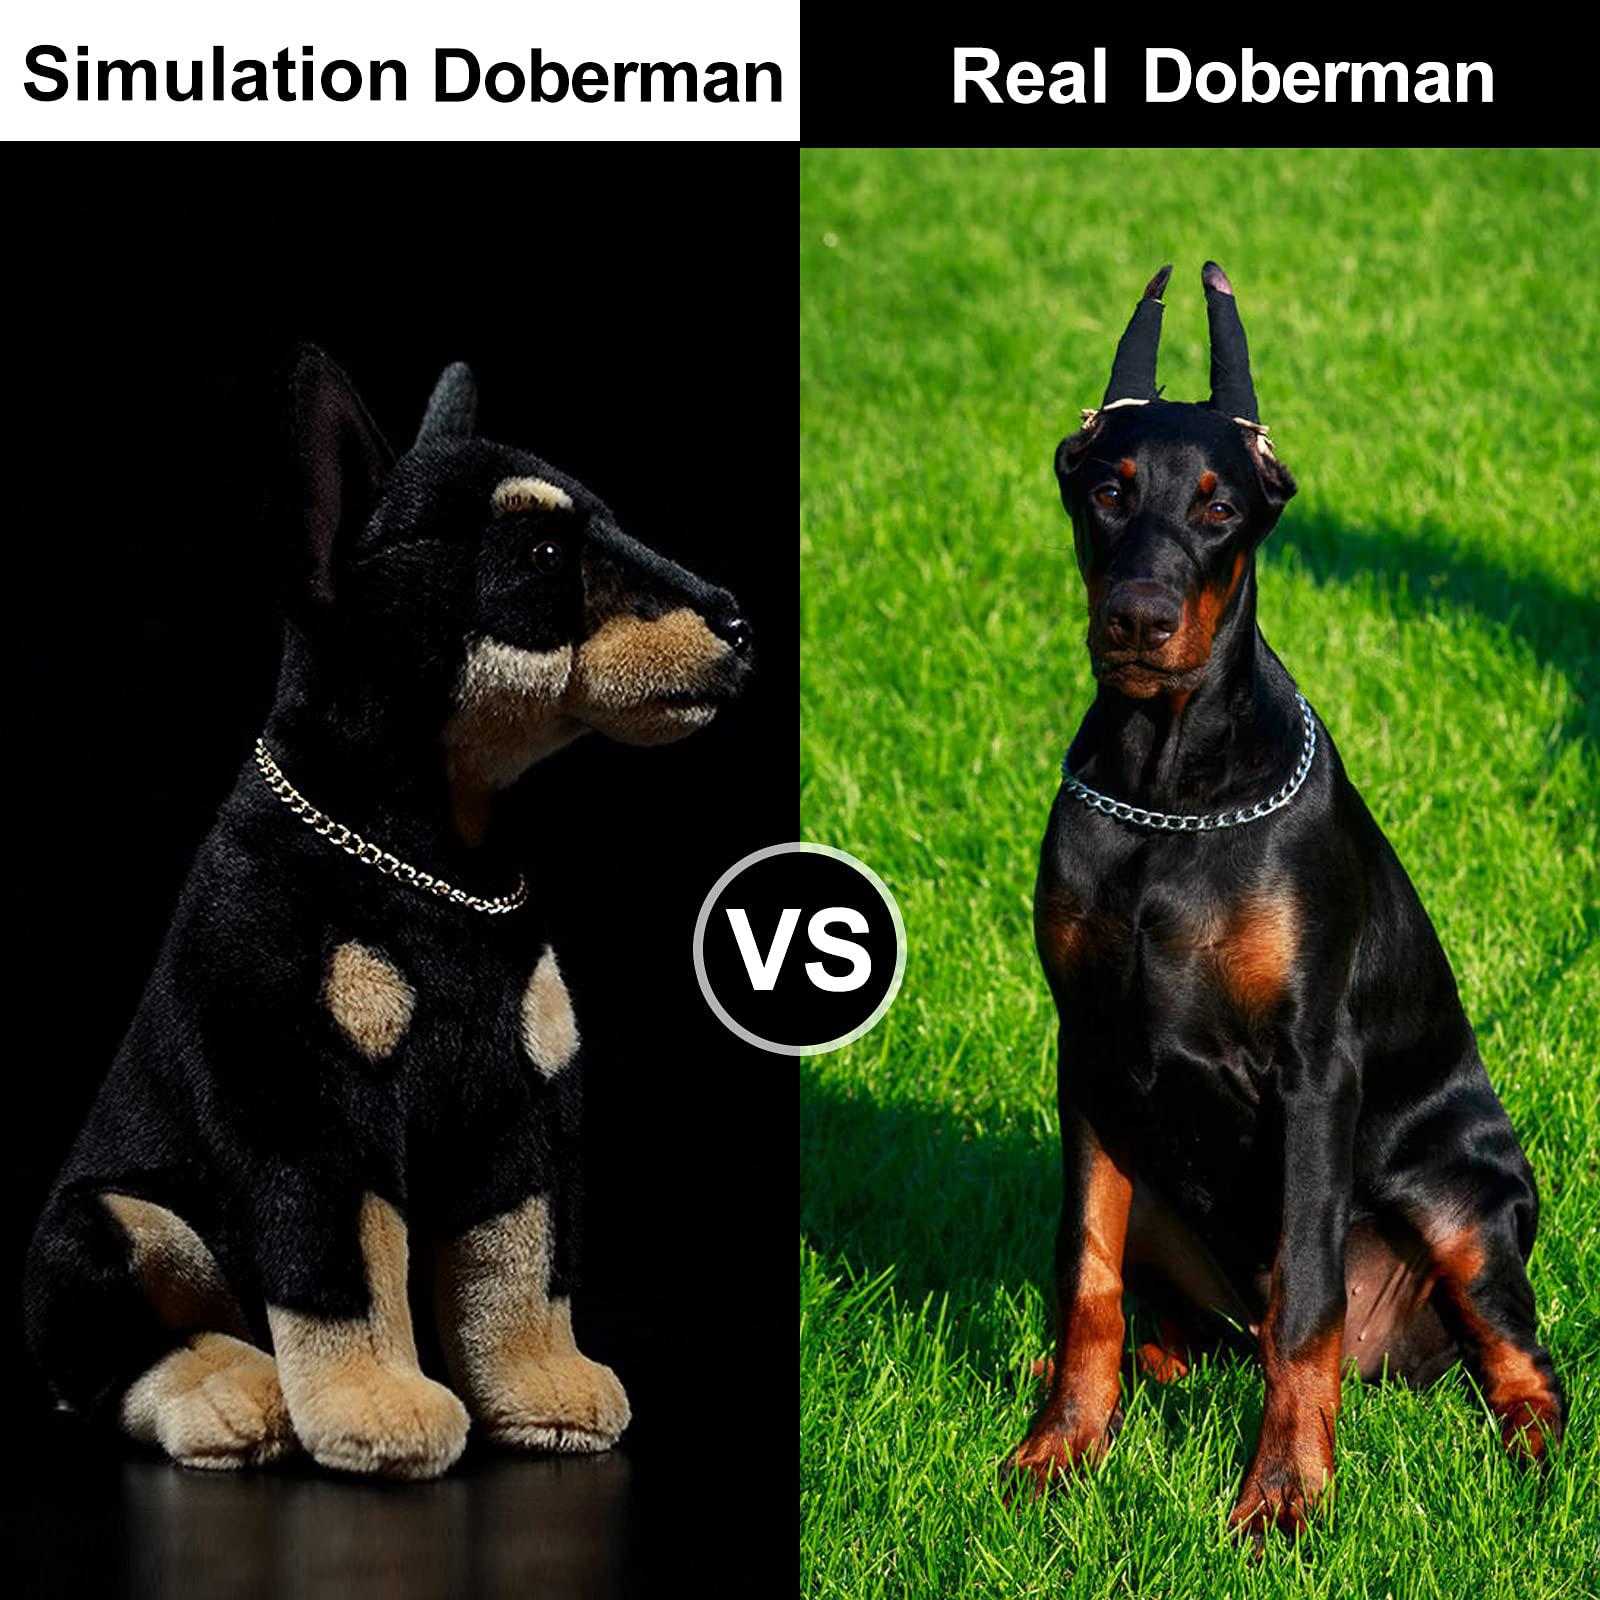 ZHONGXIN Made Simulation Doberman Stuffed Animal Puppy Dog - 12 inch Plush Toy, Best Plush Toys for Girls & Boys As Gift